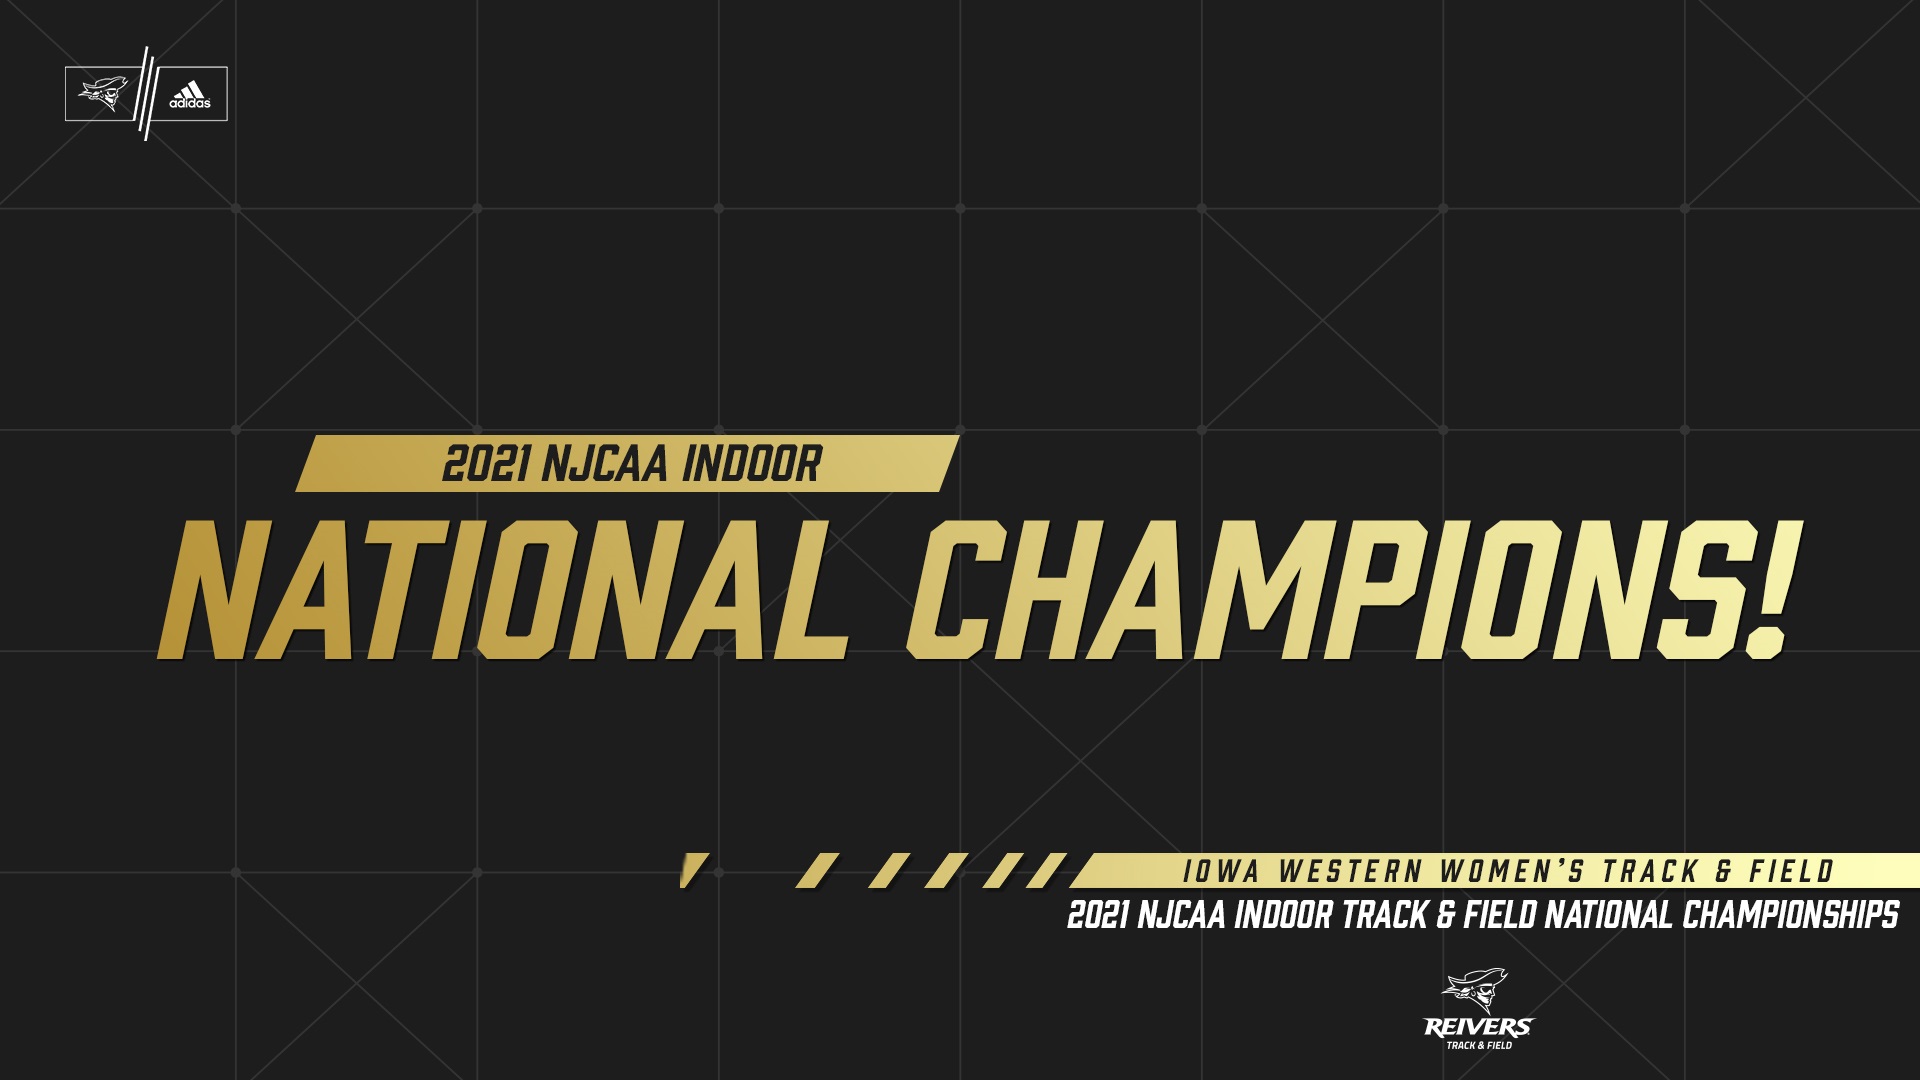 Reivers Race Into History, Win NJCAA Indoor National Championship!